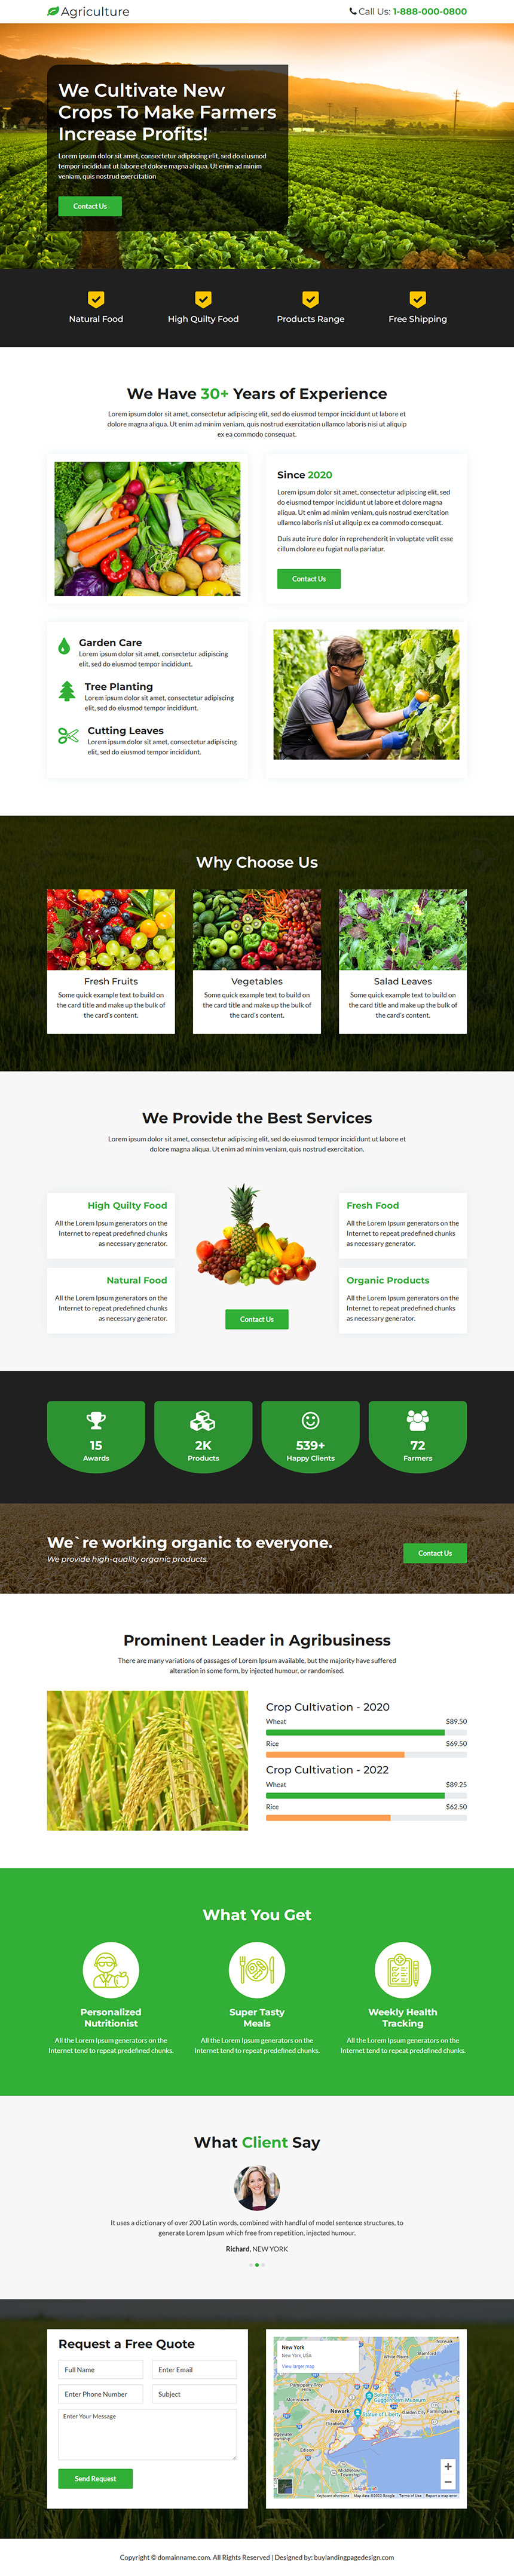 agriculture service responsive landing page design